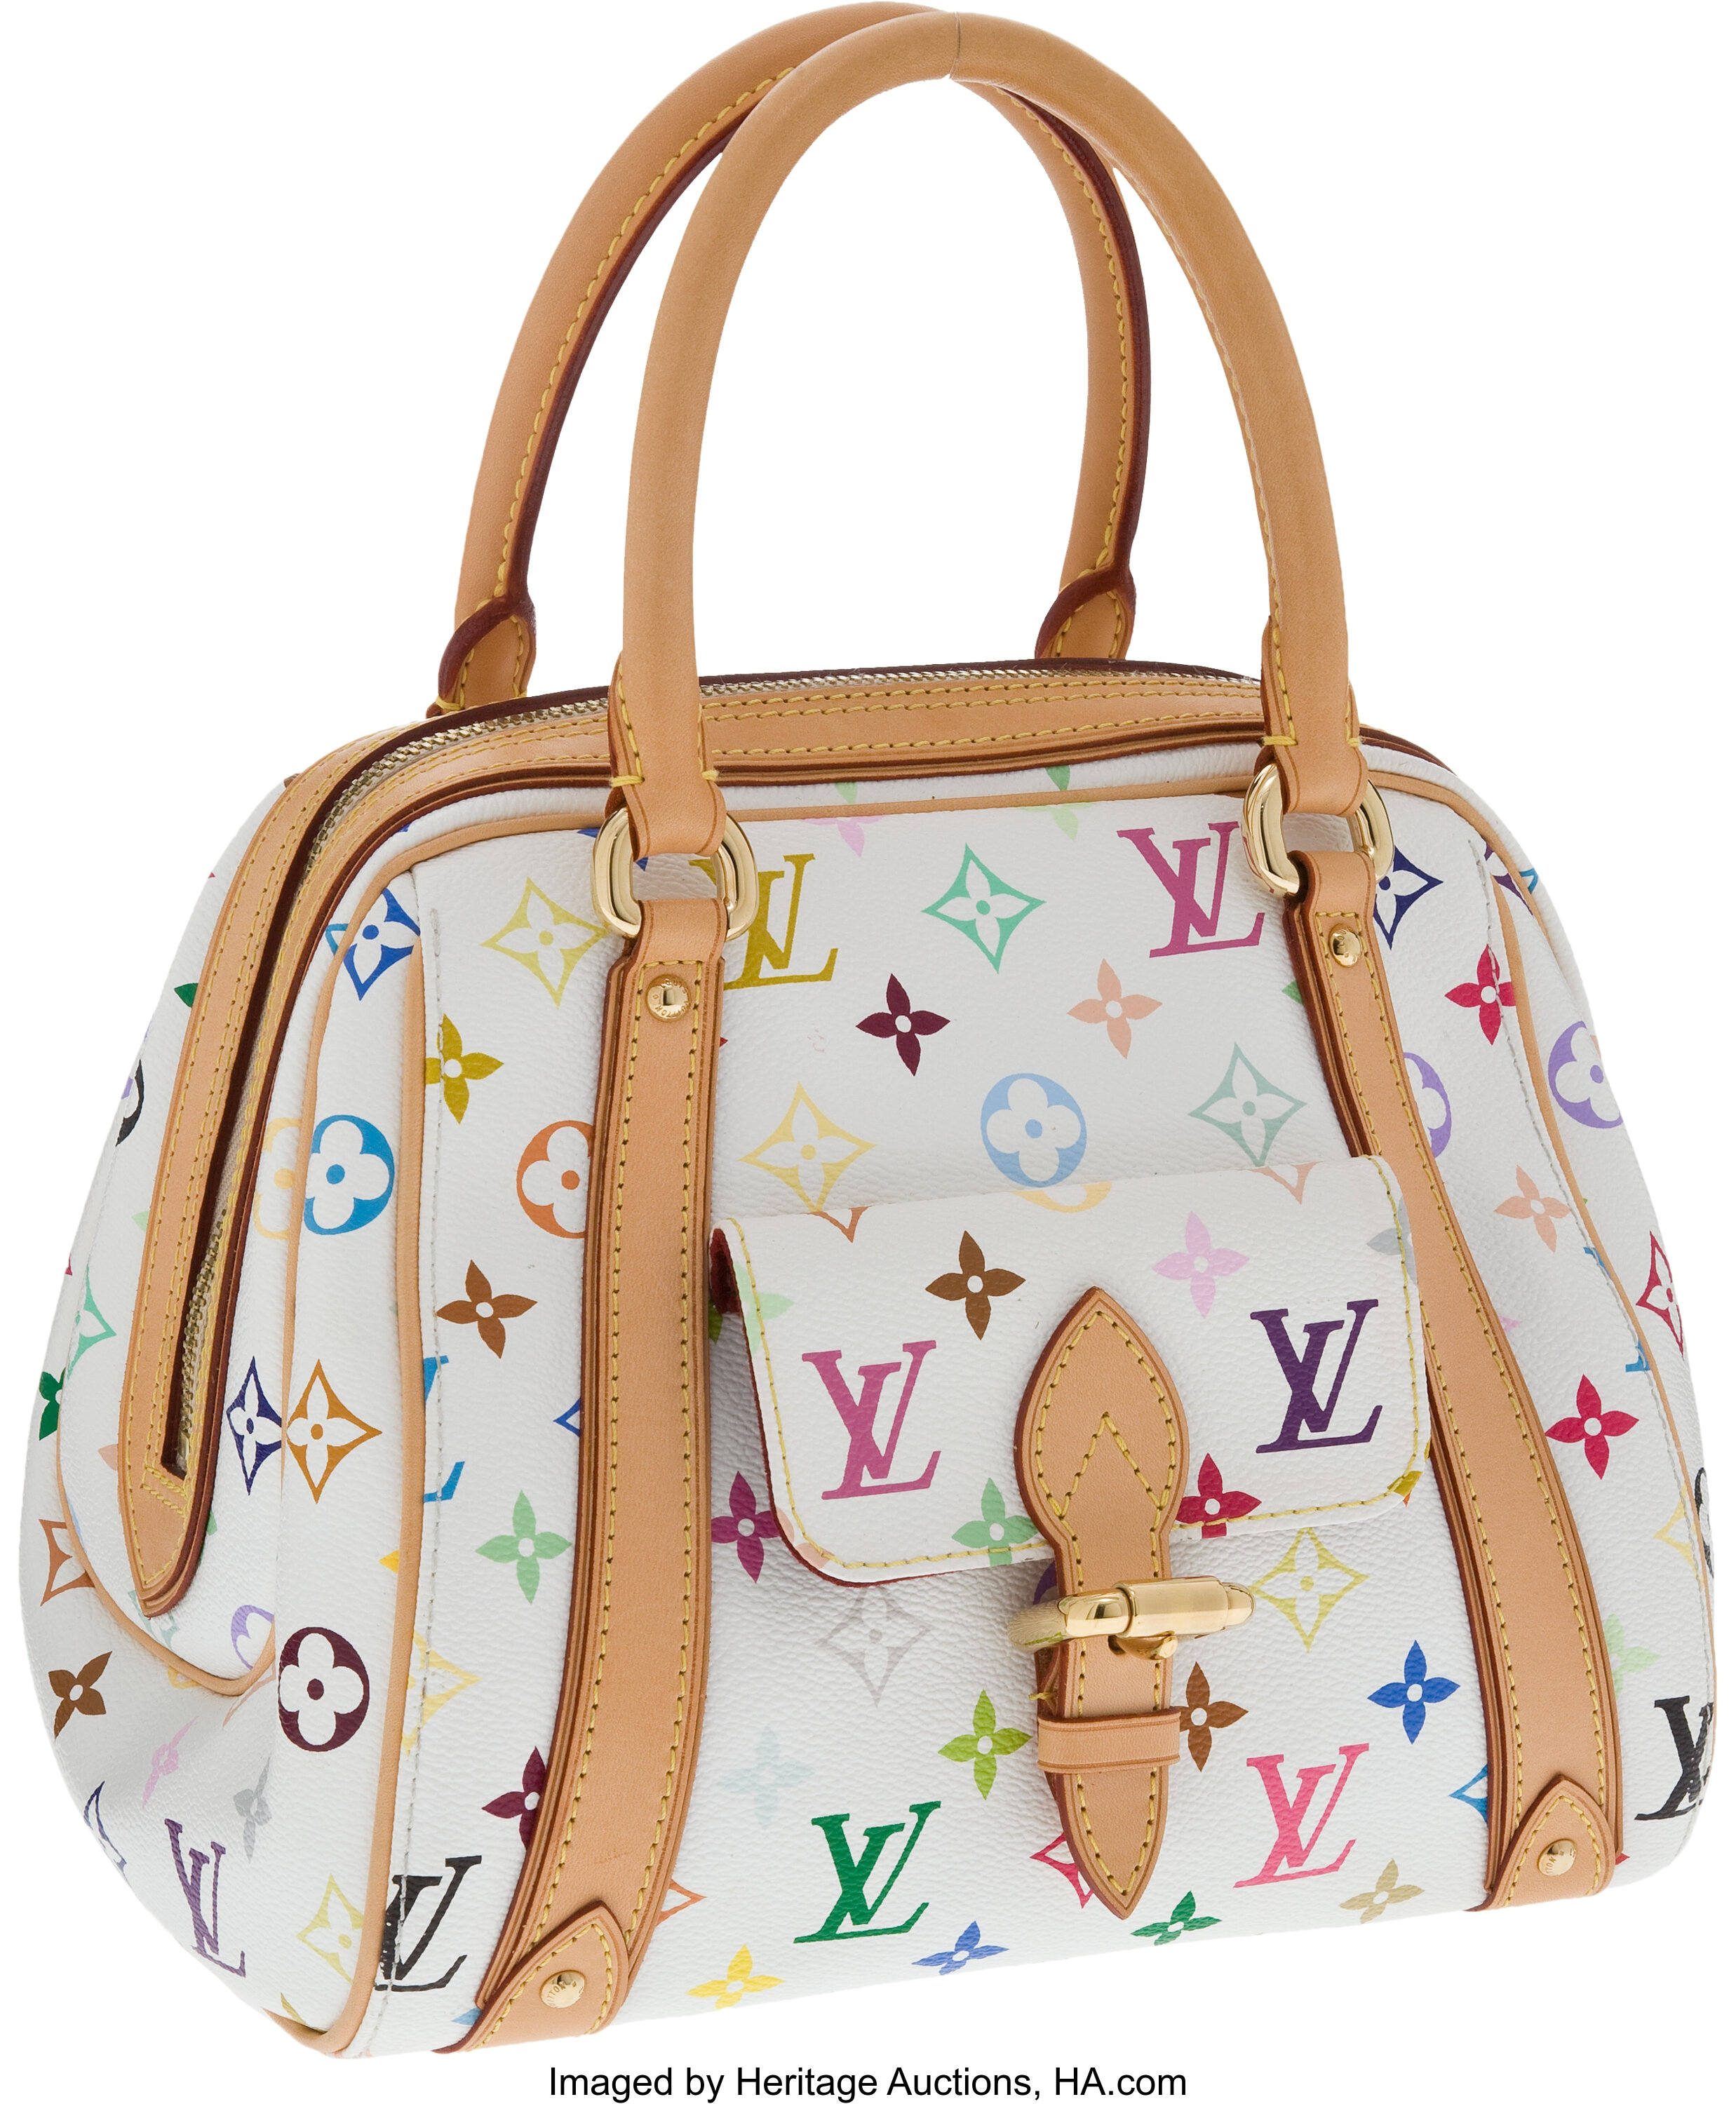 Sold at Auction: Louis Vuitton, Louis Vuitton Multicolor Alma Handbag